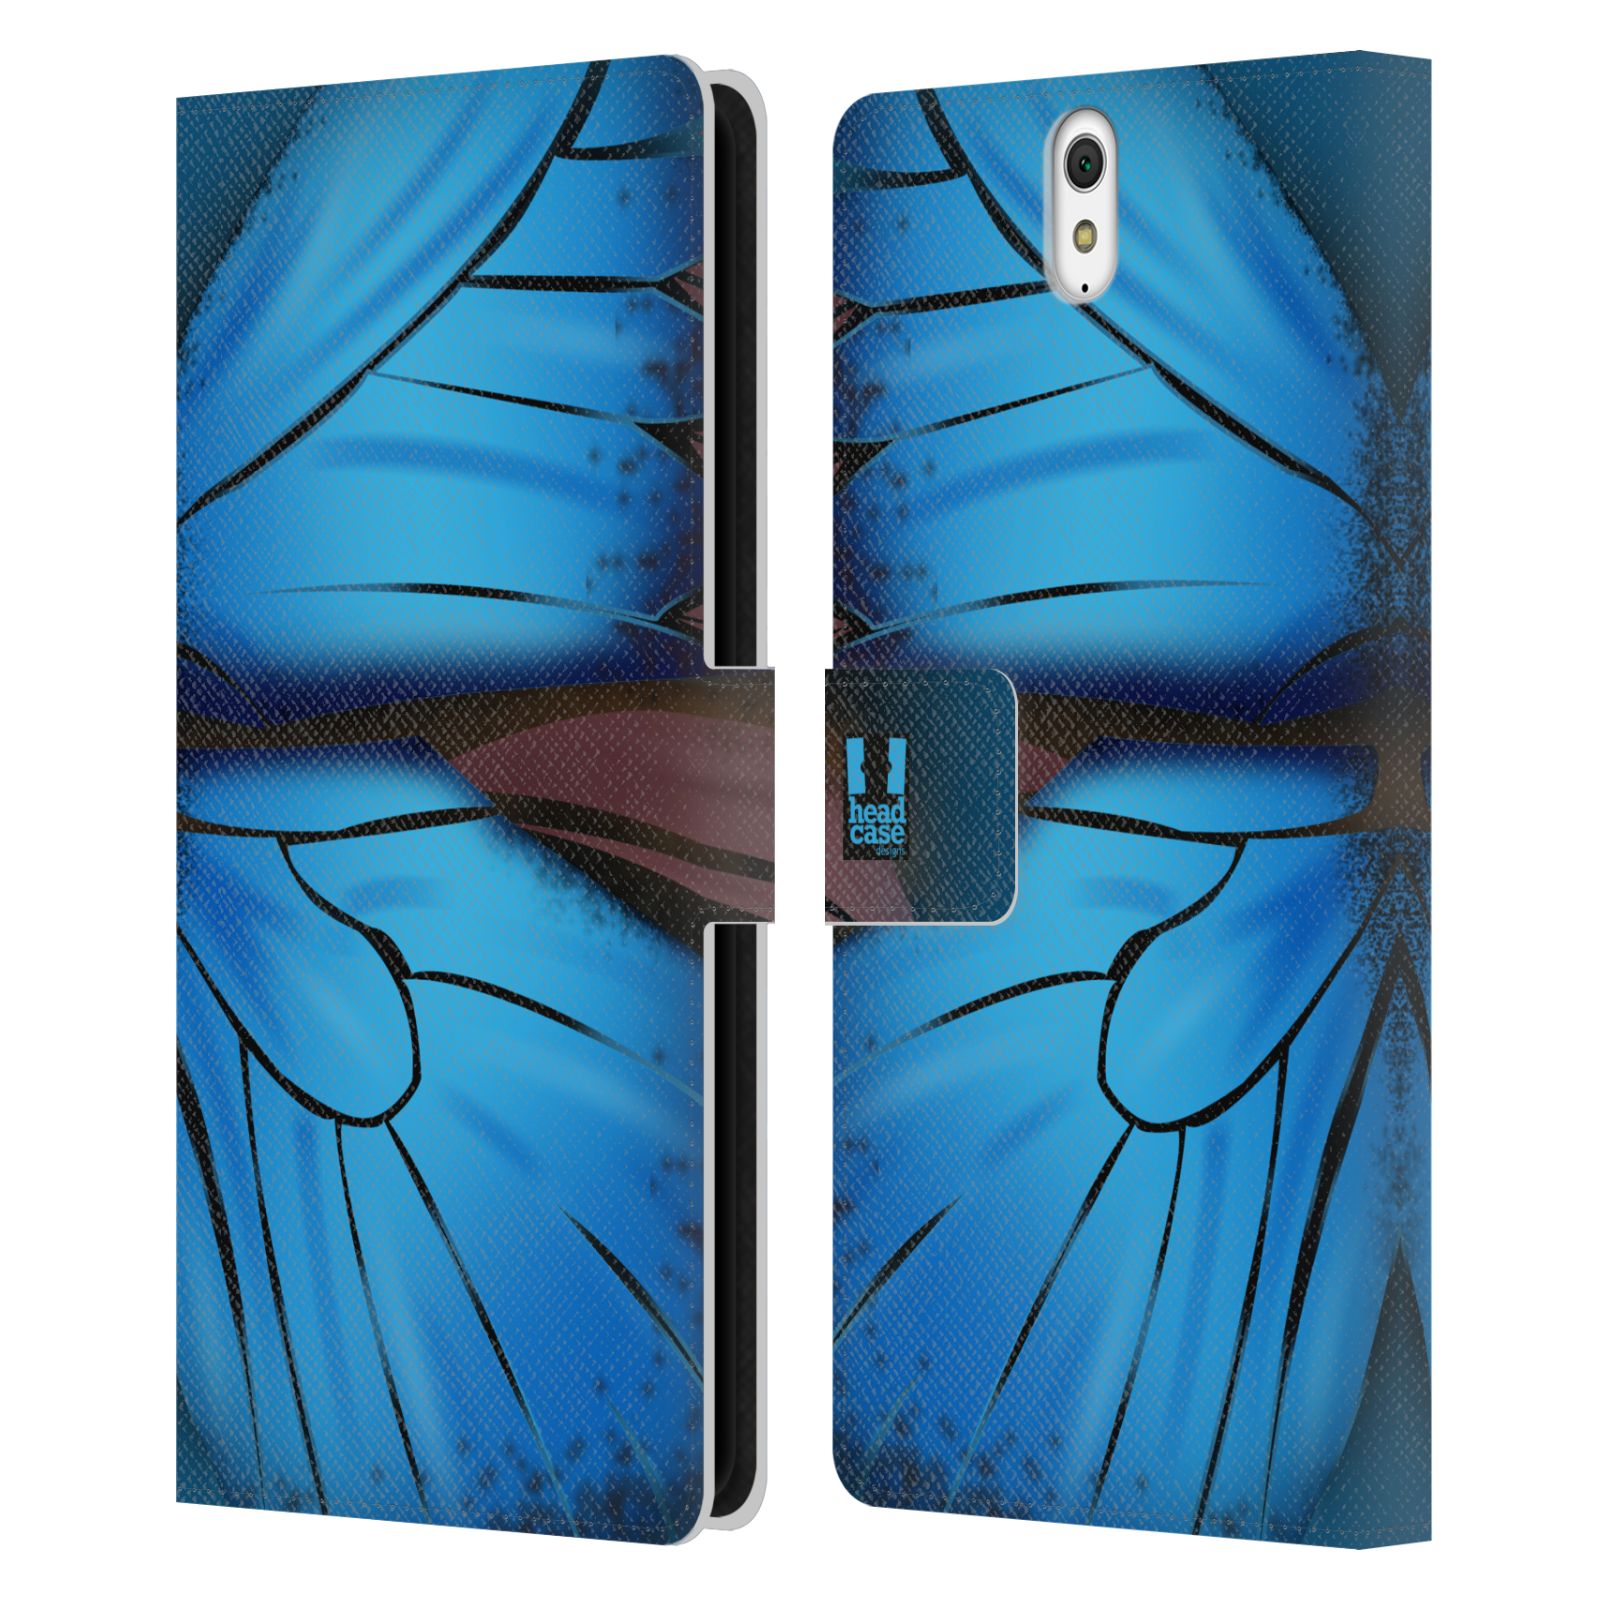 HEAD CASE Flipové pouzdro pro mobil SONY XPERIA C5 Ultra motýl a křídla kreslený vzor modrá barva